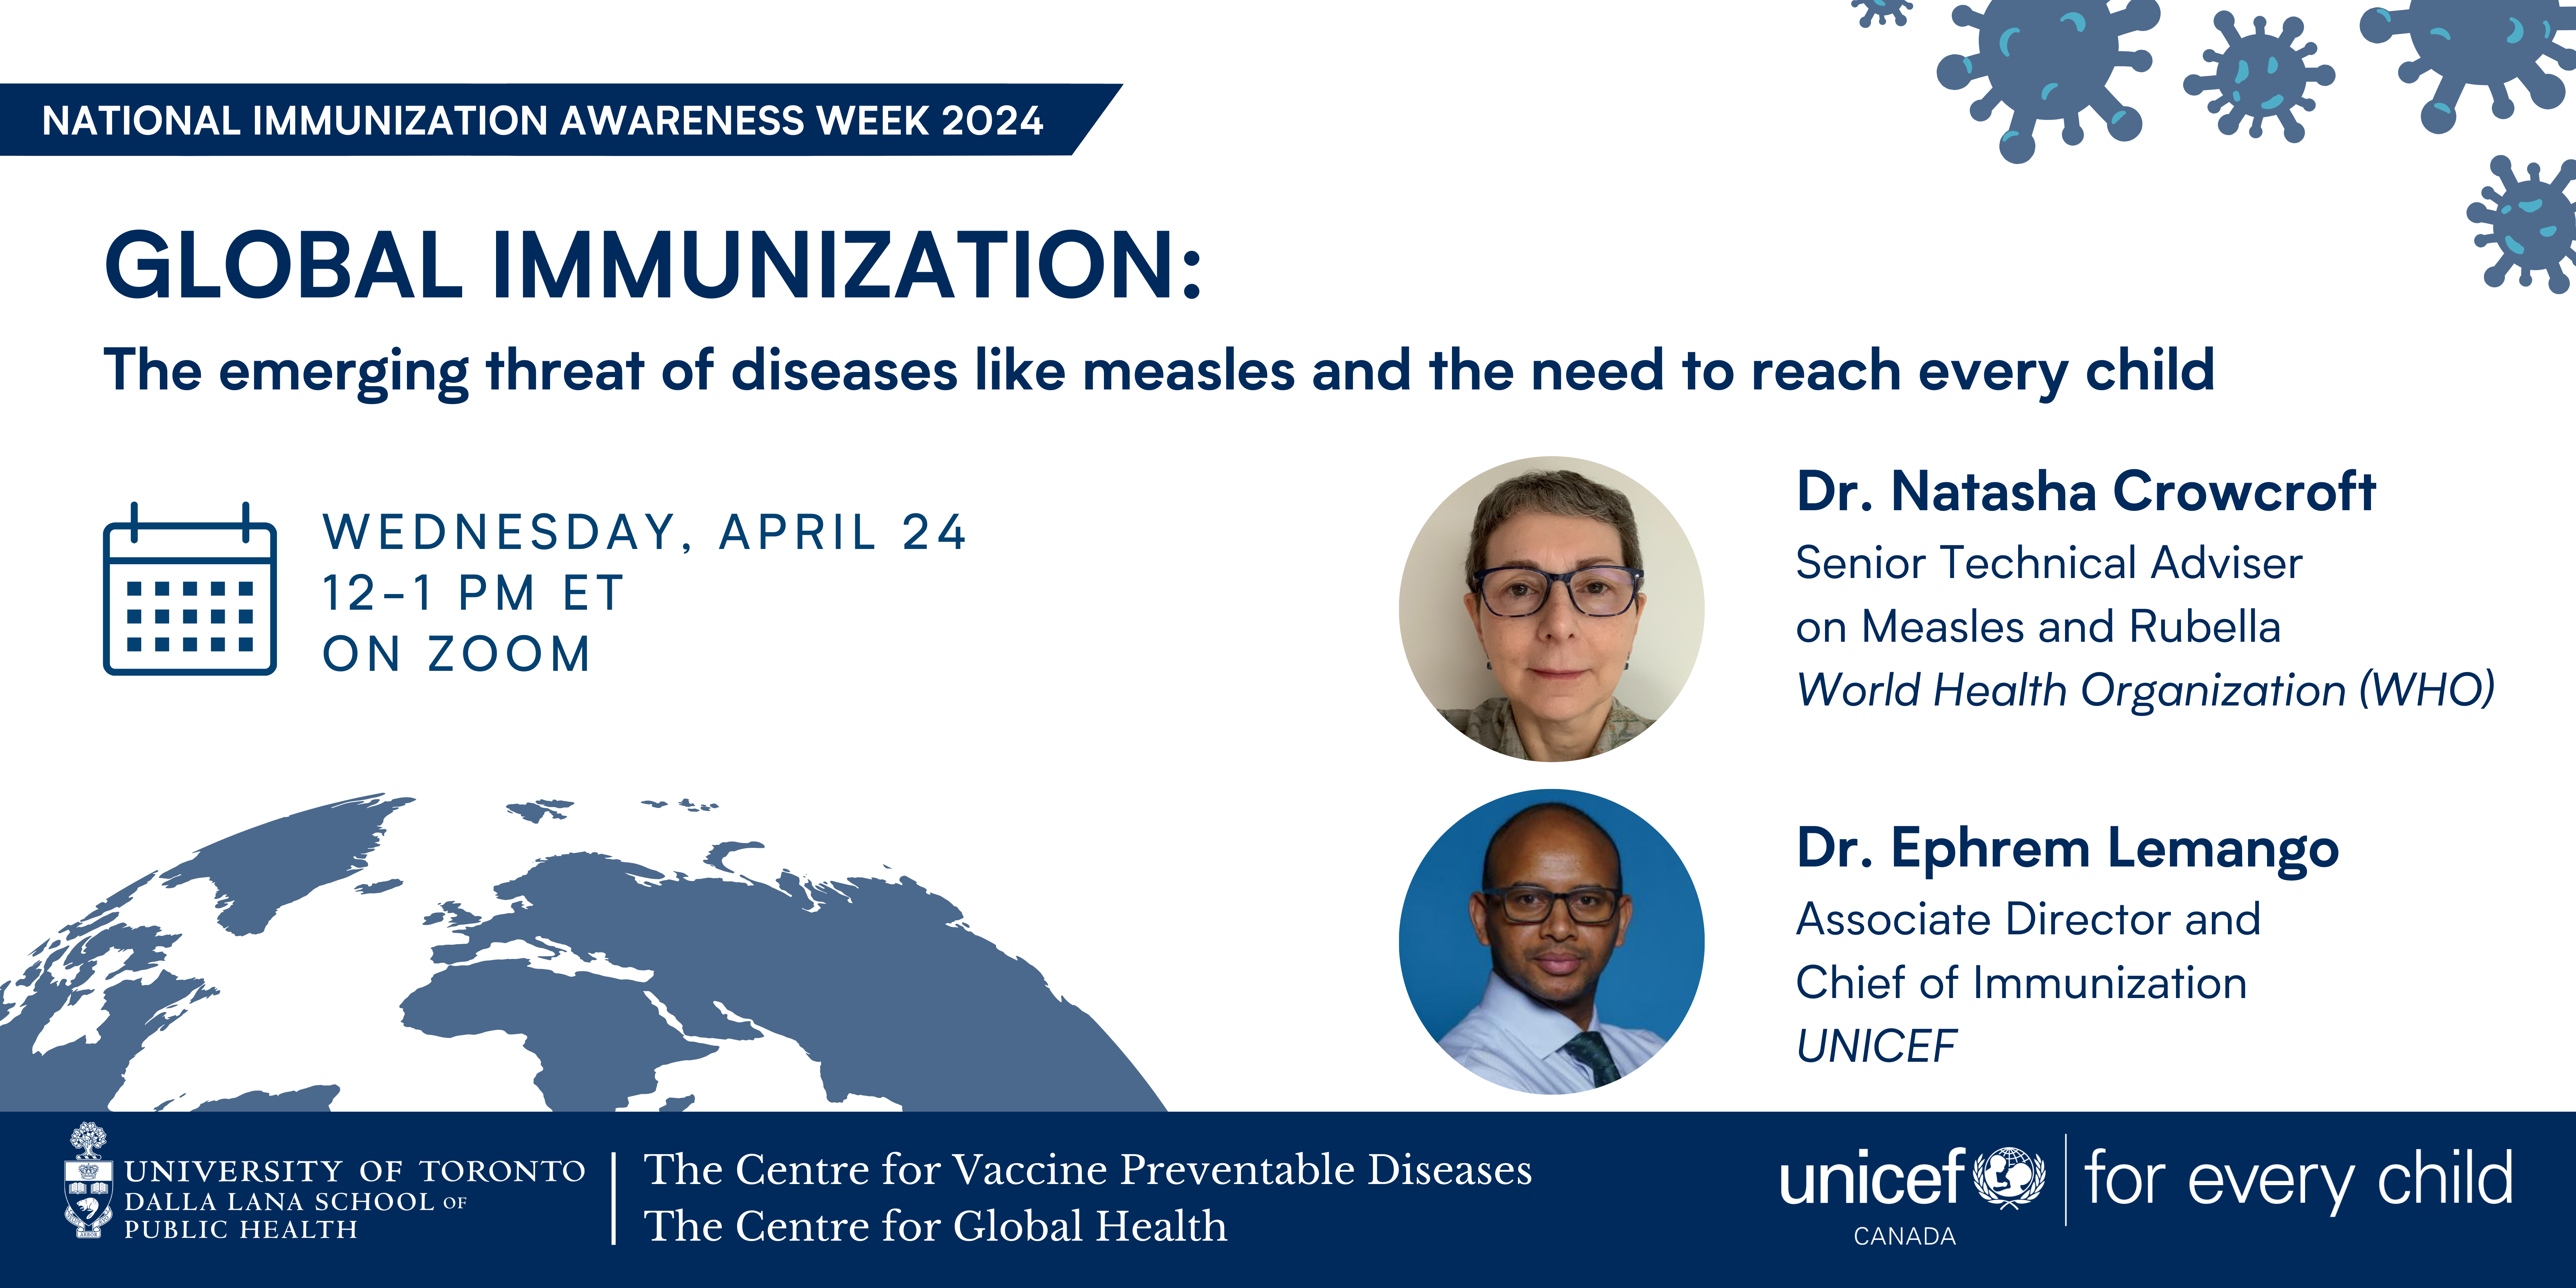 Global Immunization webinar on April 24, 12-1pm featuring speakers Dr. Natasha Crowcroft and Dr. Ephrem Lemango